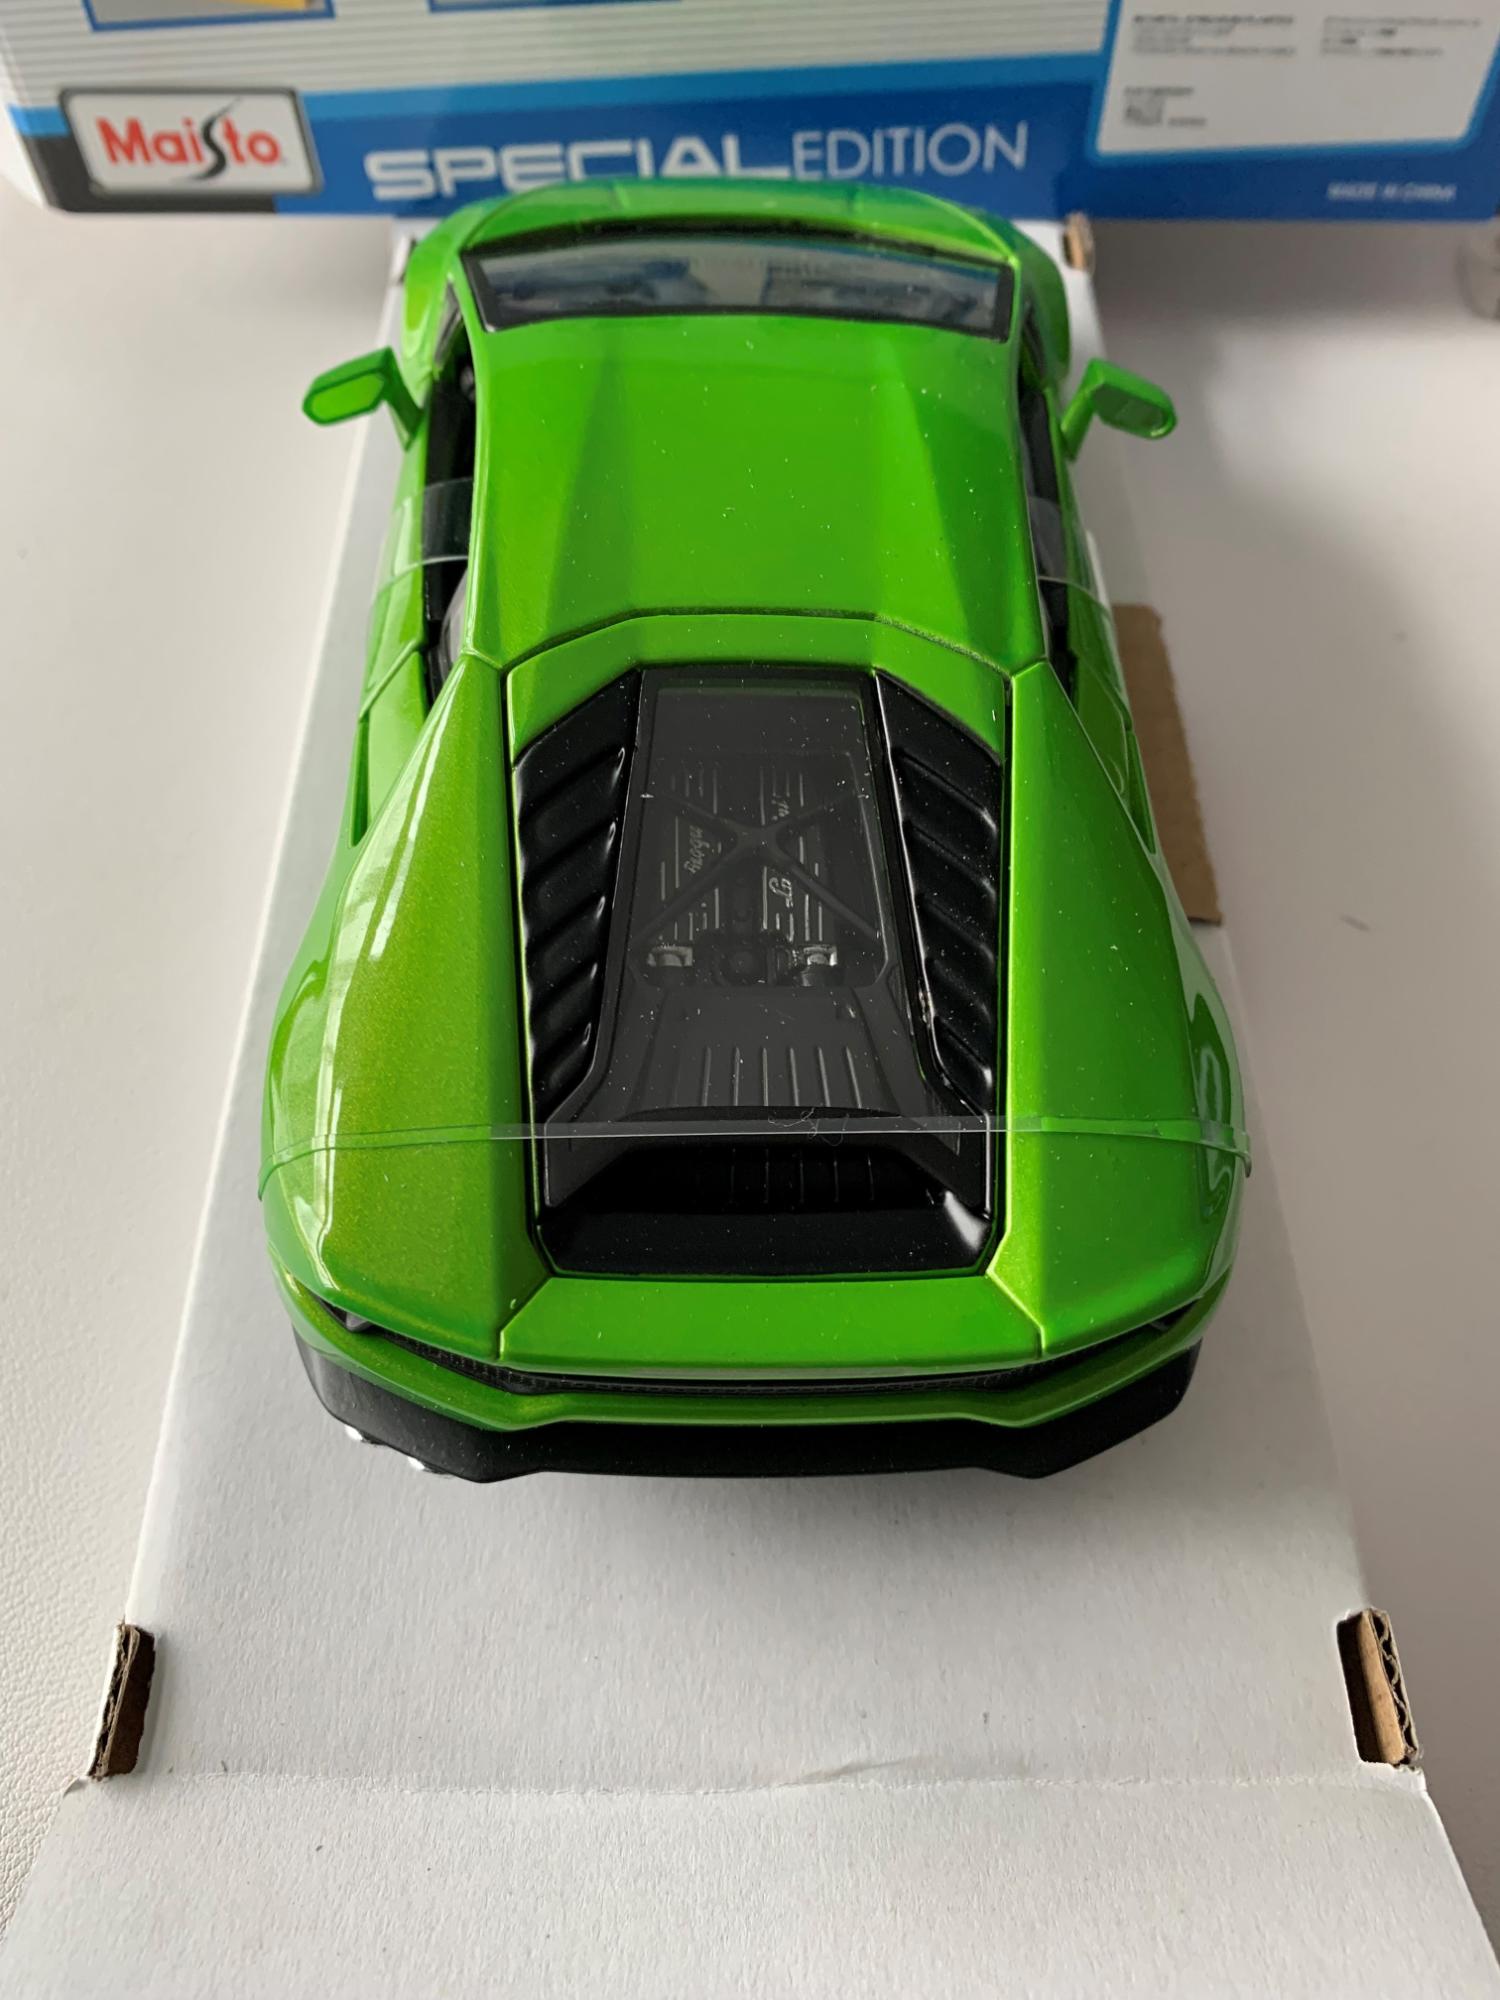 Lamborghini Huracan LP 610-4 in green 1:24 scale model from Maisto